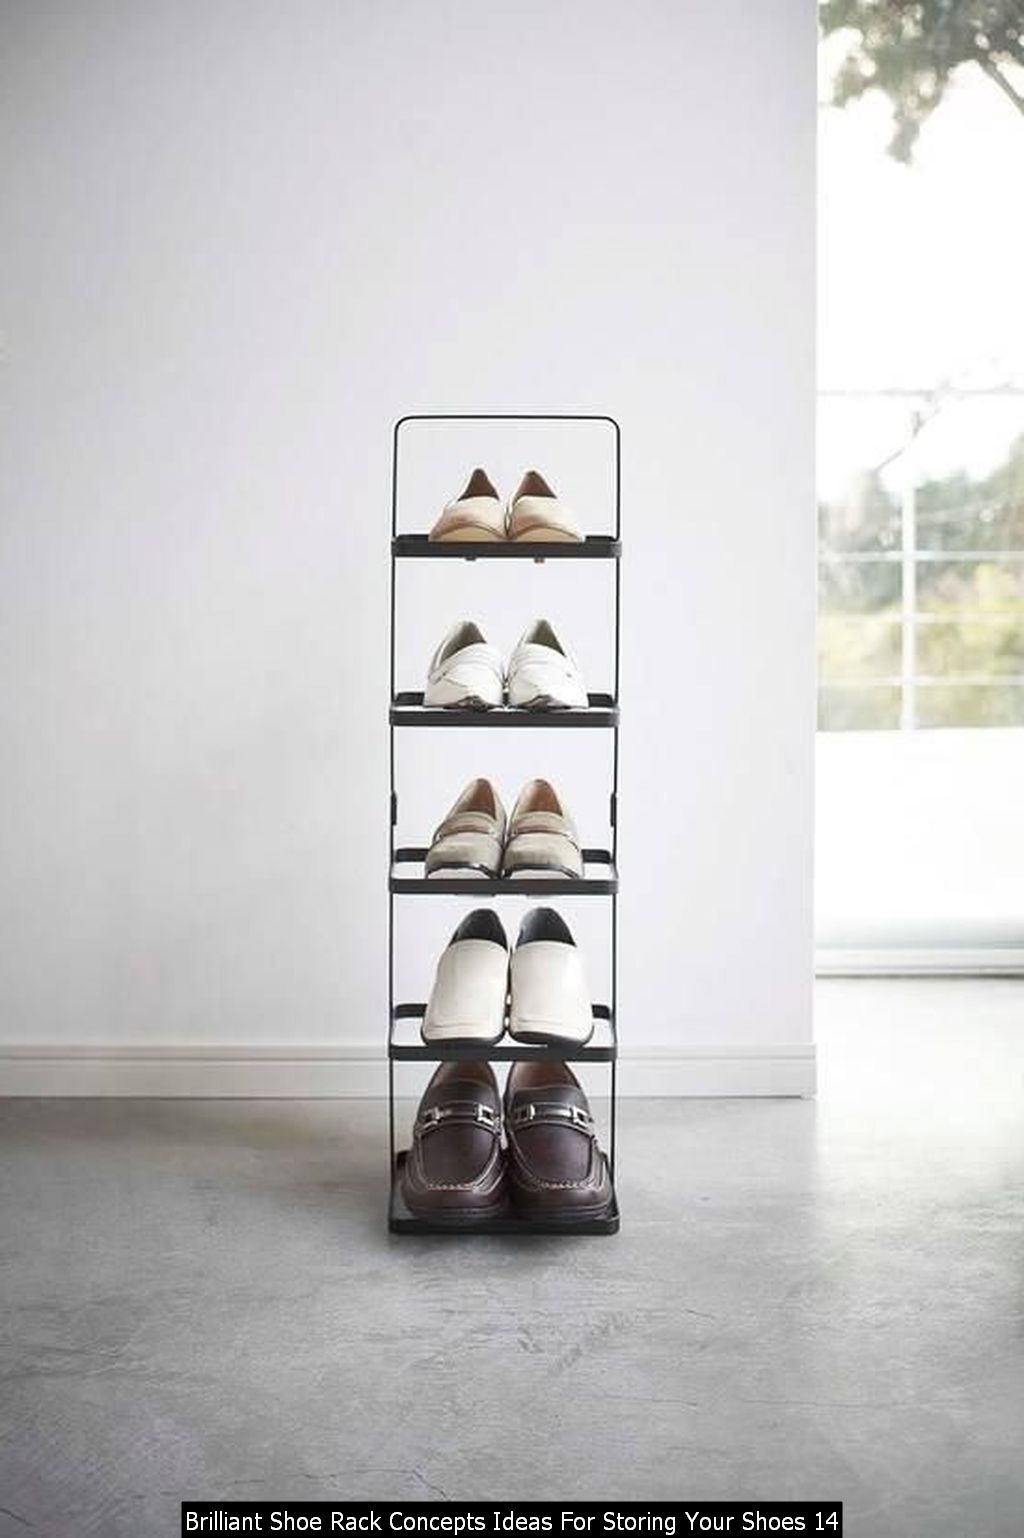 Brilliant Shoe Rack Concepts Ideas For Storing Your Shoes 14